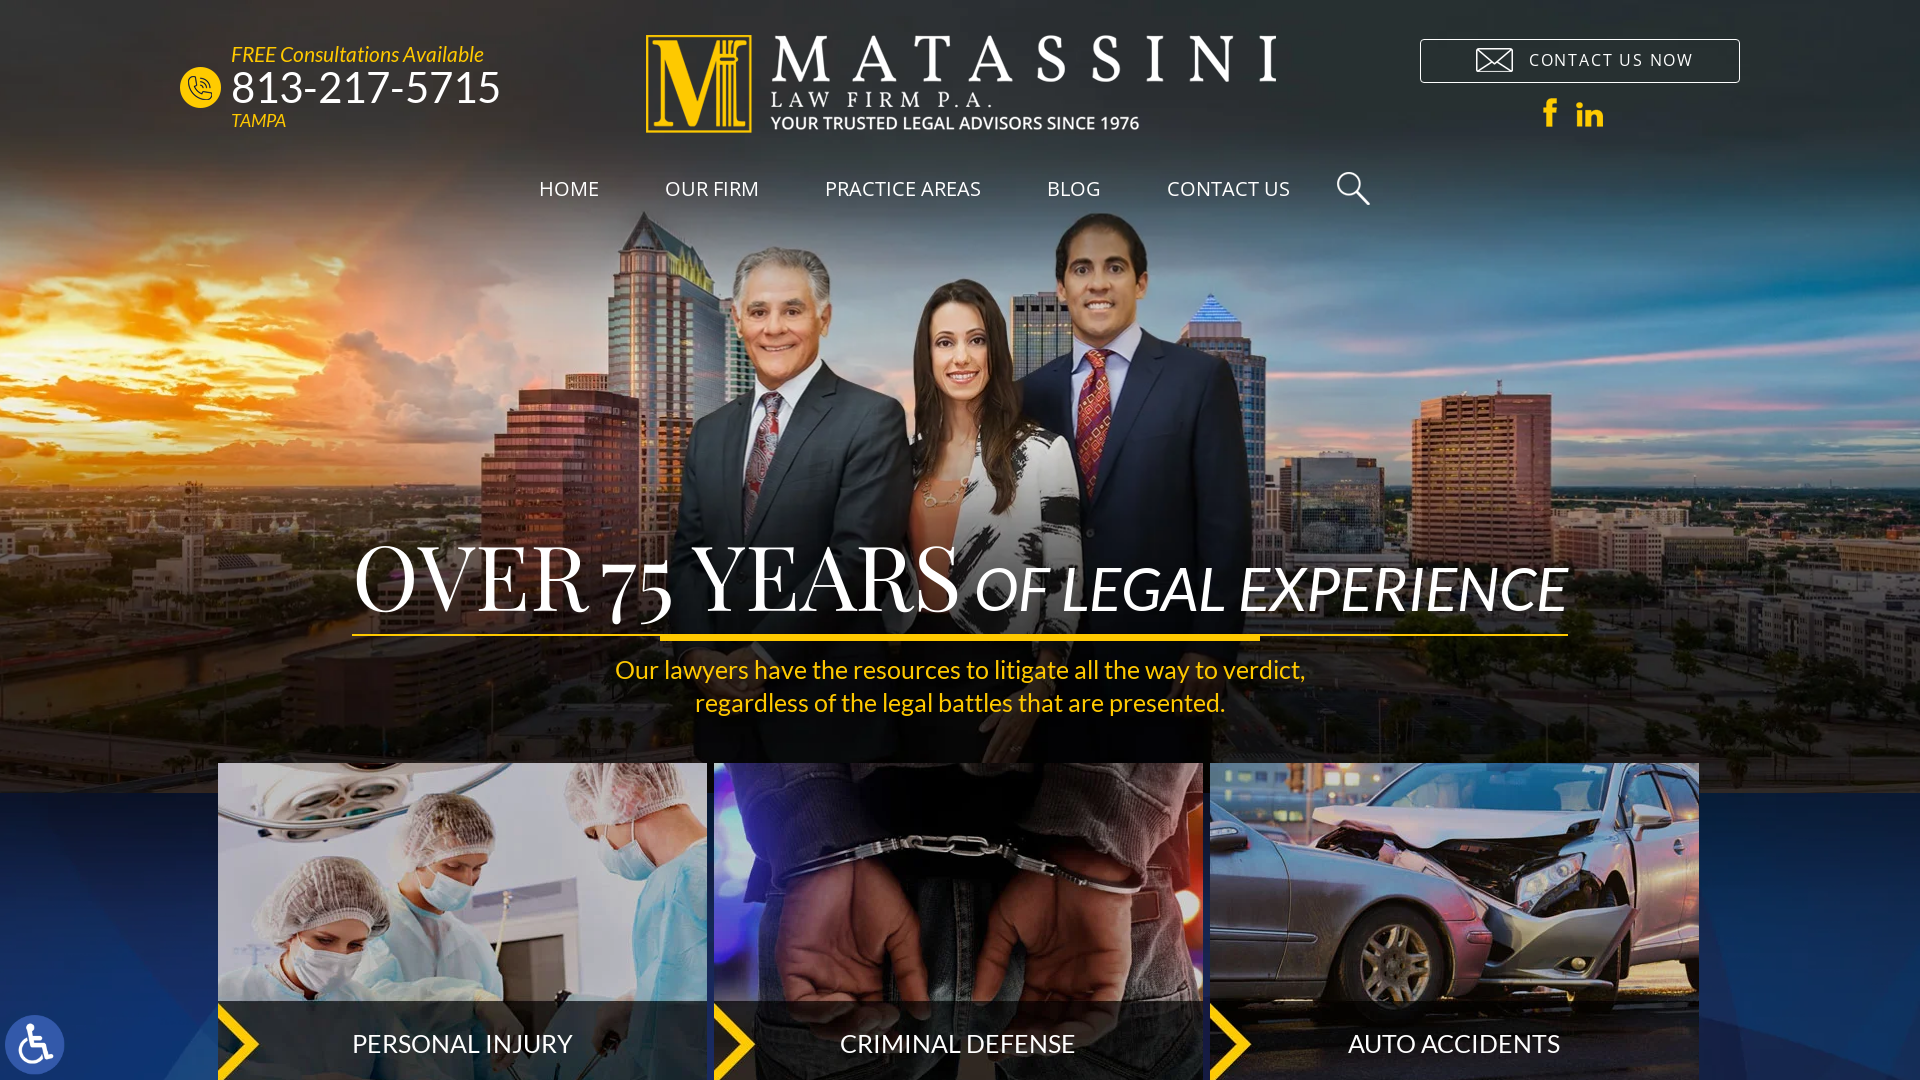 The Matassini Law Firm, P.A.